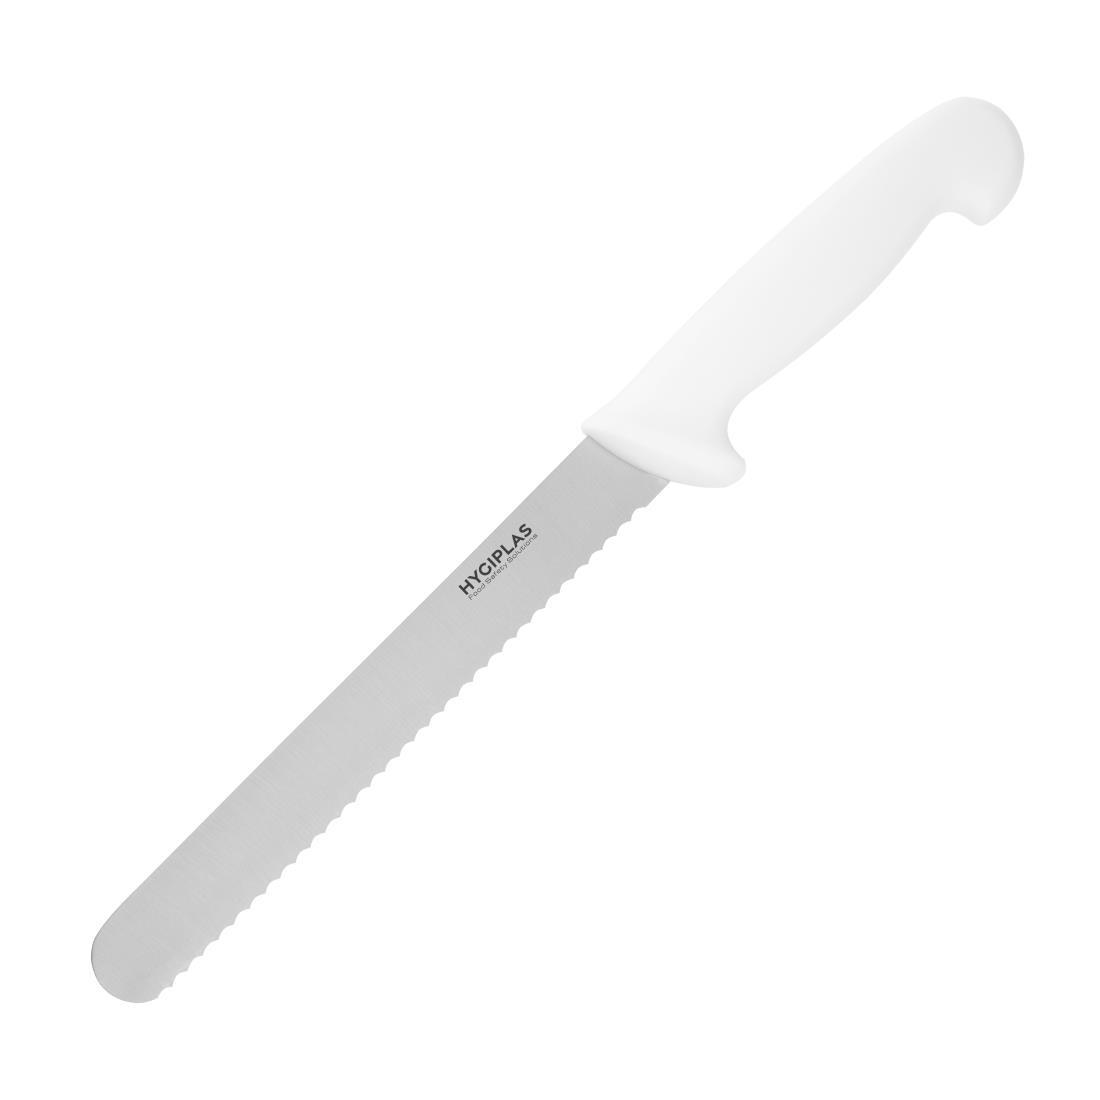 Hygiplas Bread Knife White 20.5cm - C882  - 1